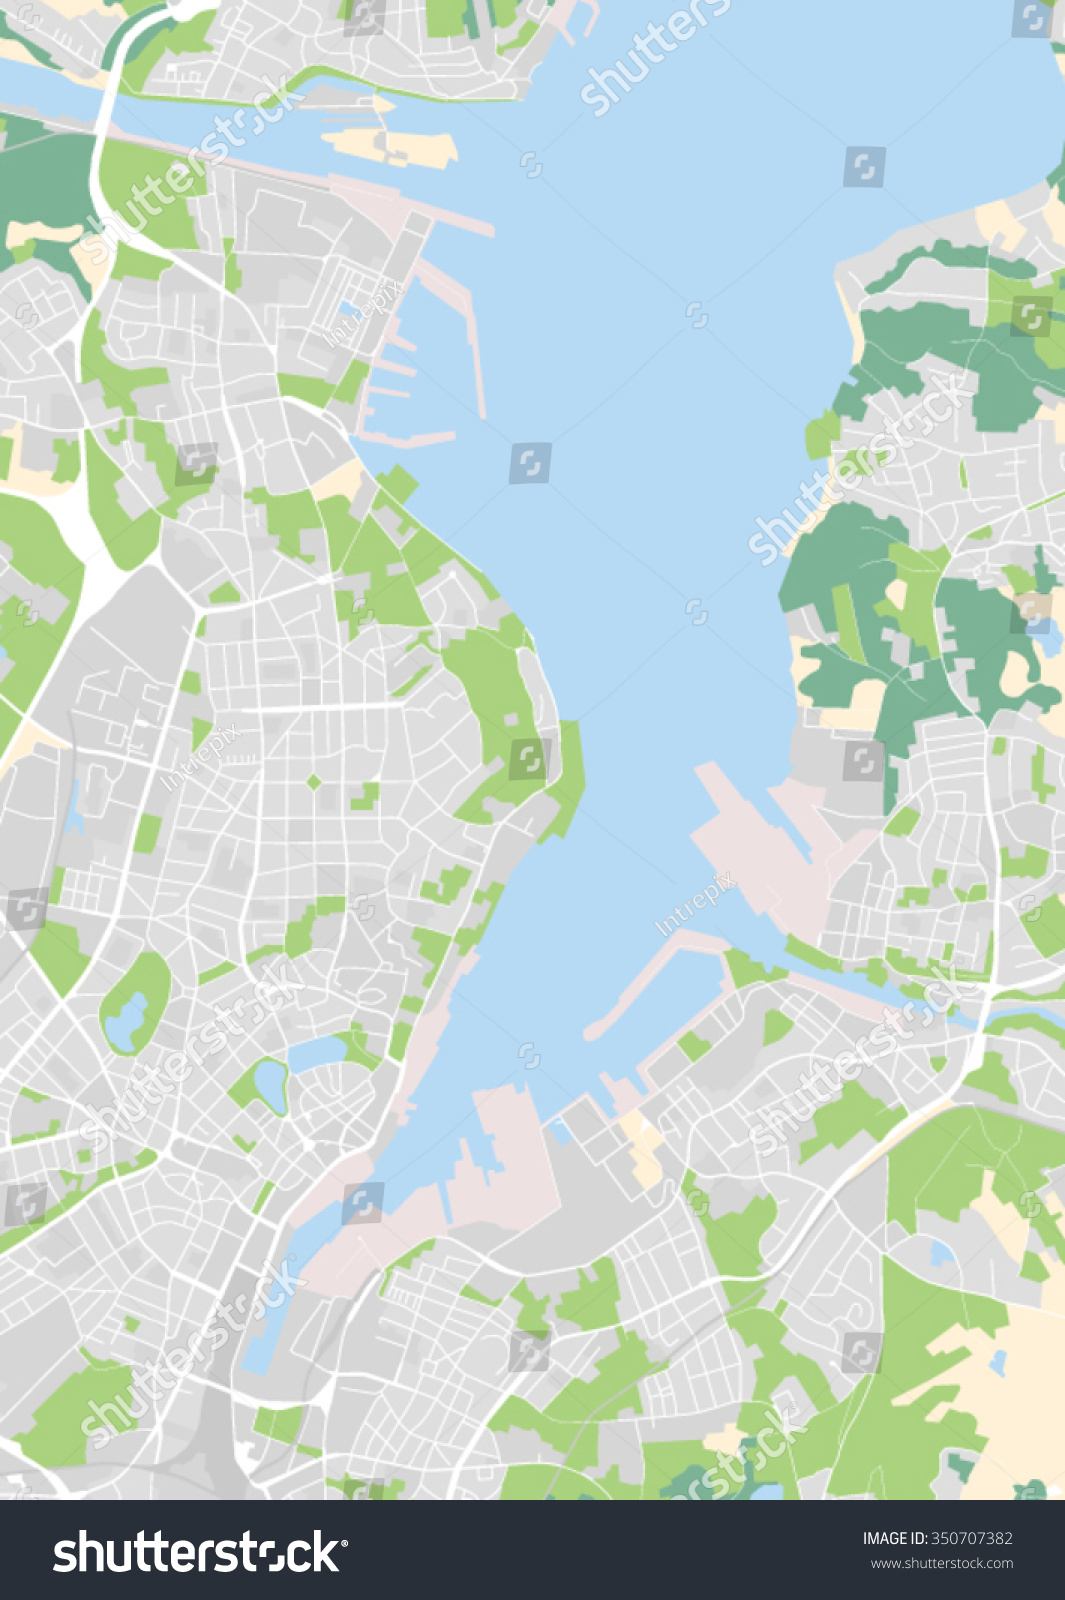 SVG of vector map of the city of Kiel, Germany svg